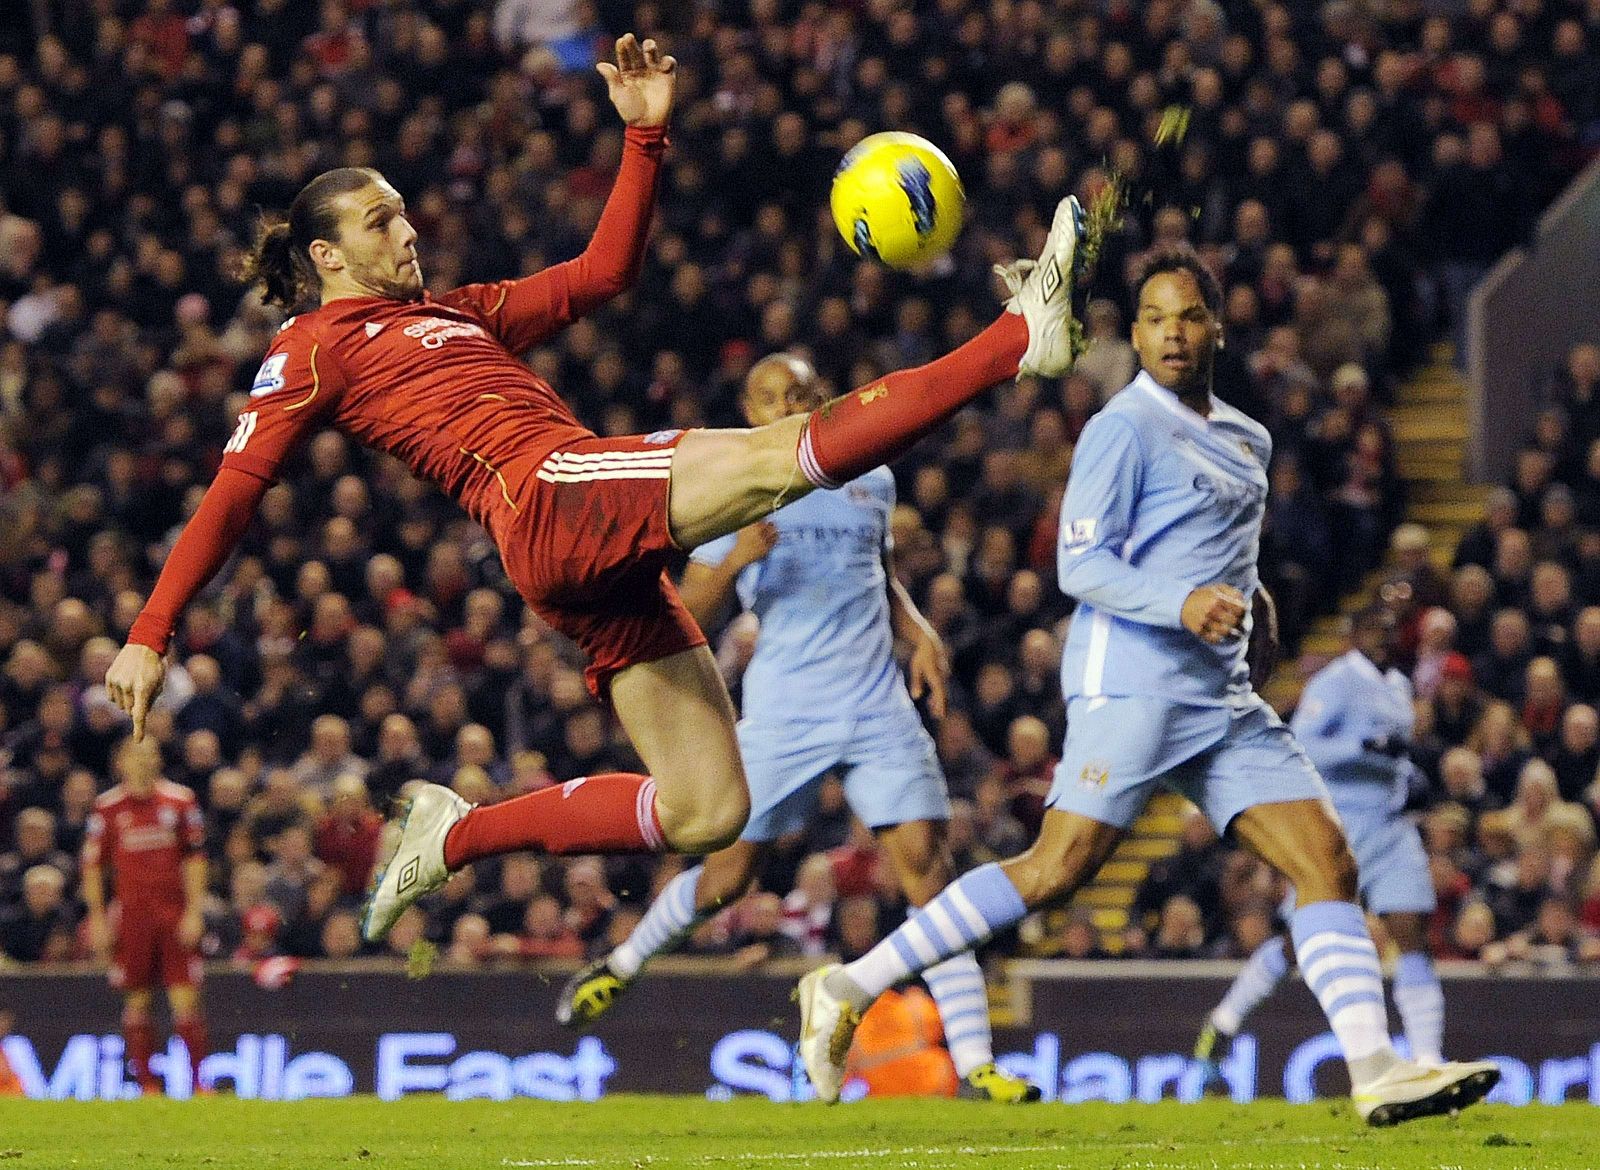 El jugador del Liverpool Andy Carroll intenta controlar la pelota ante los jugadores del City.